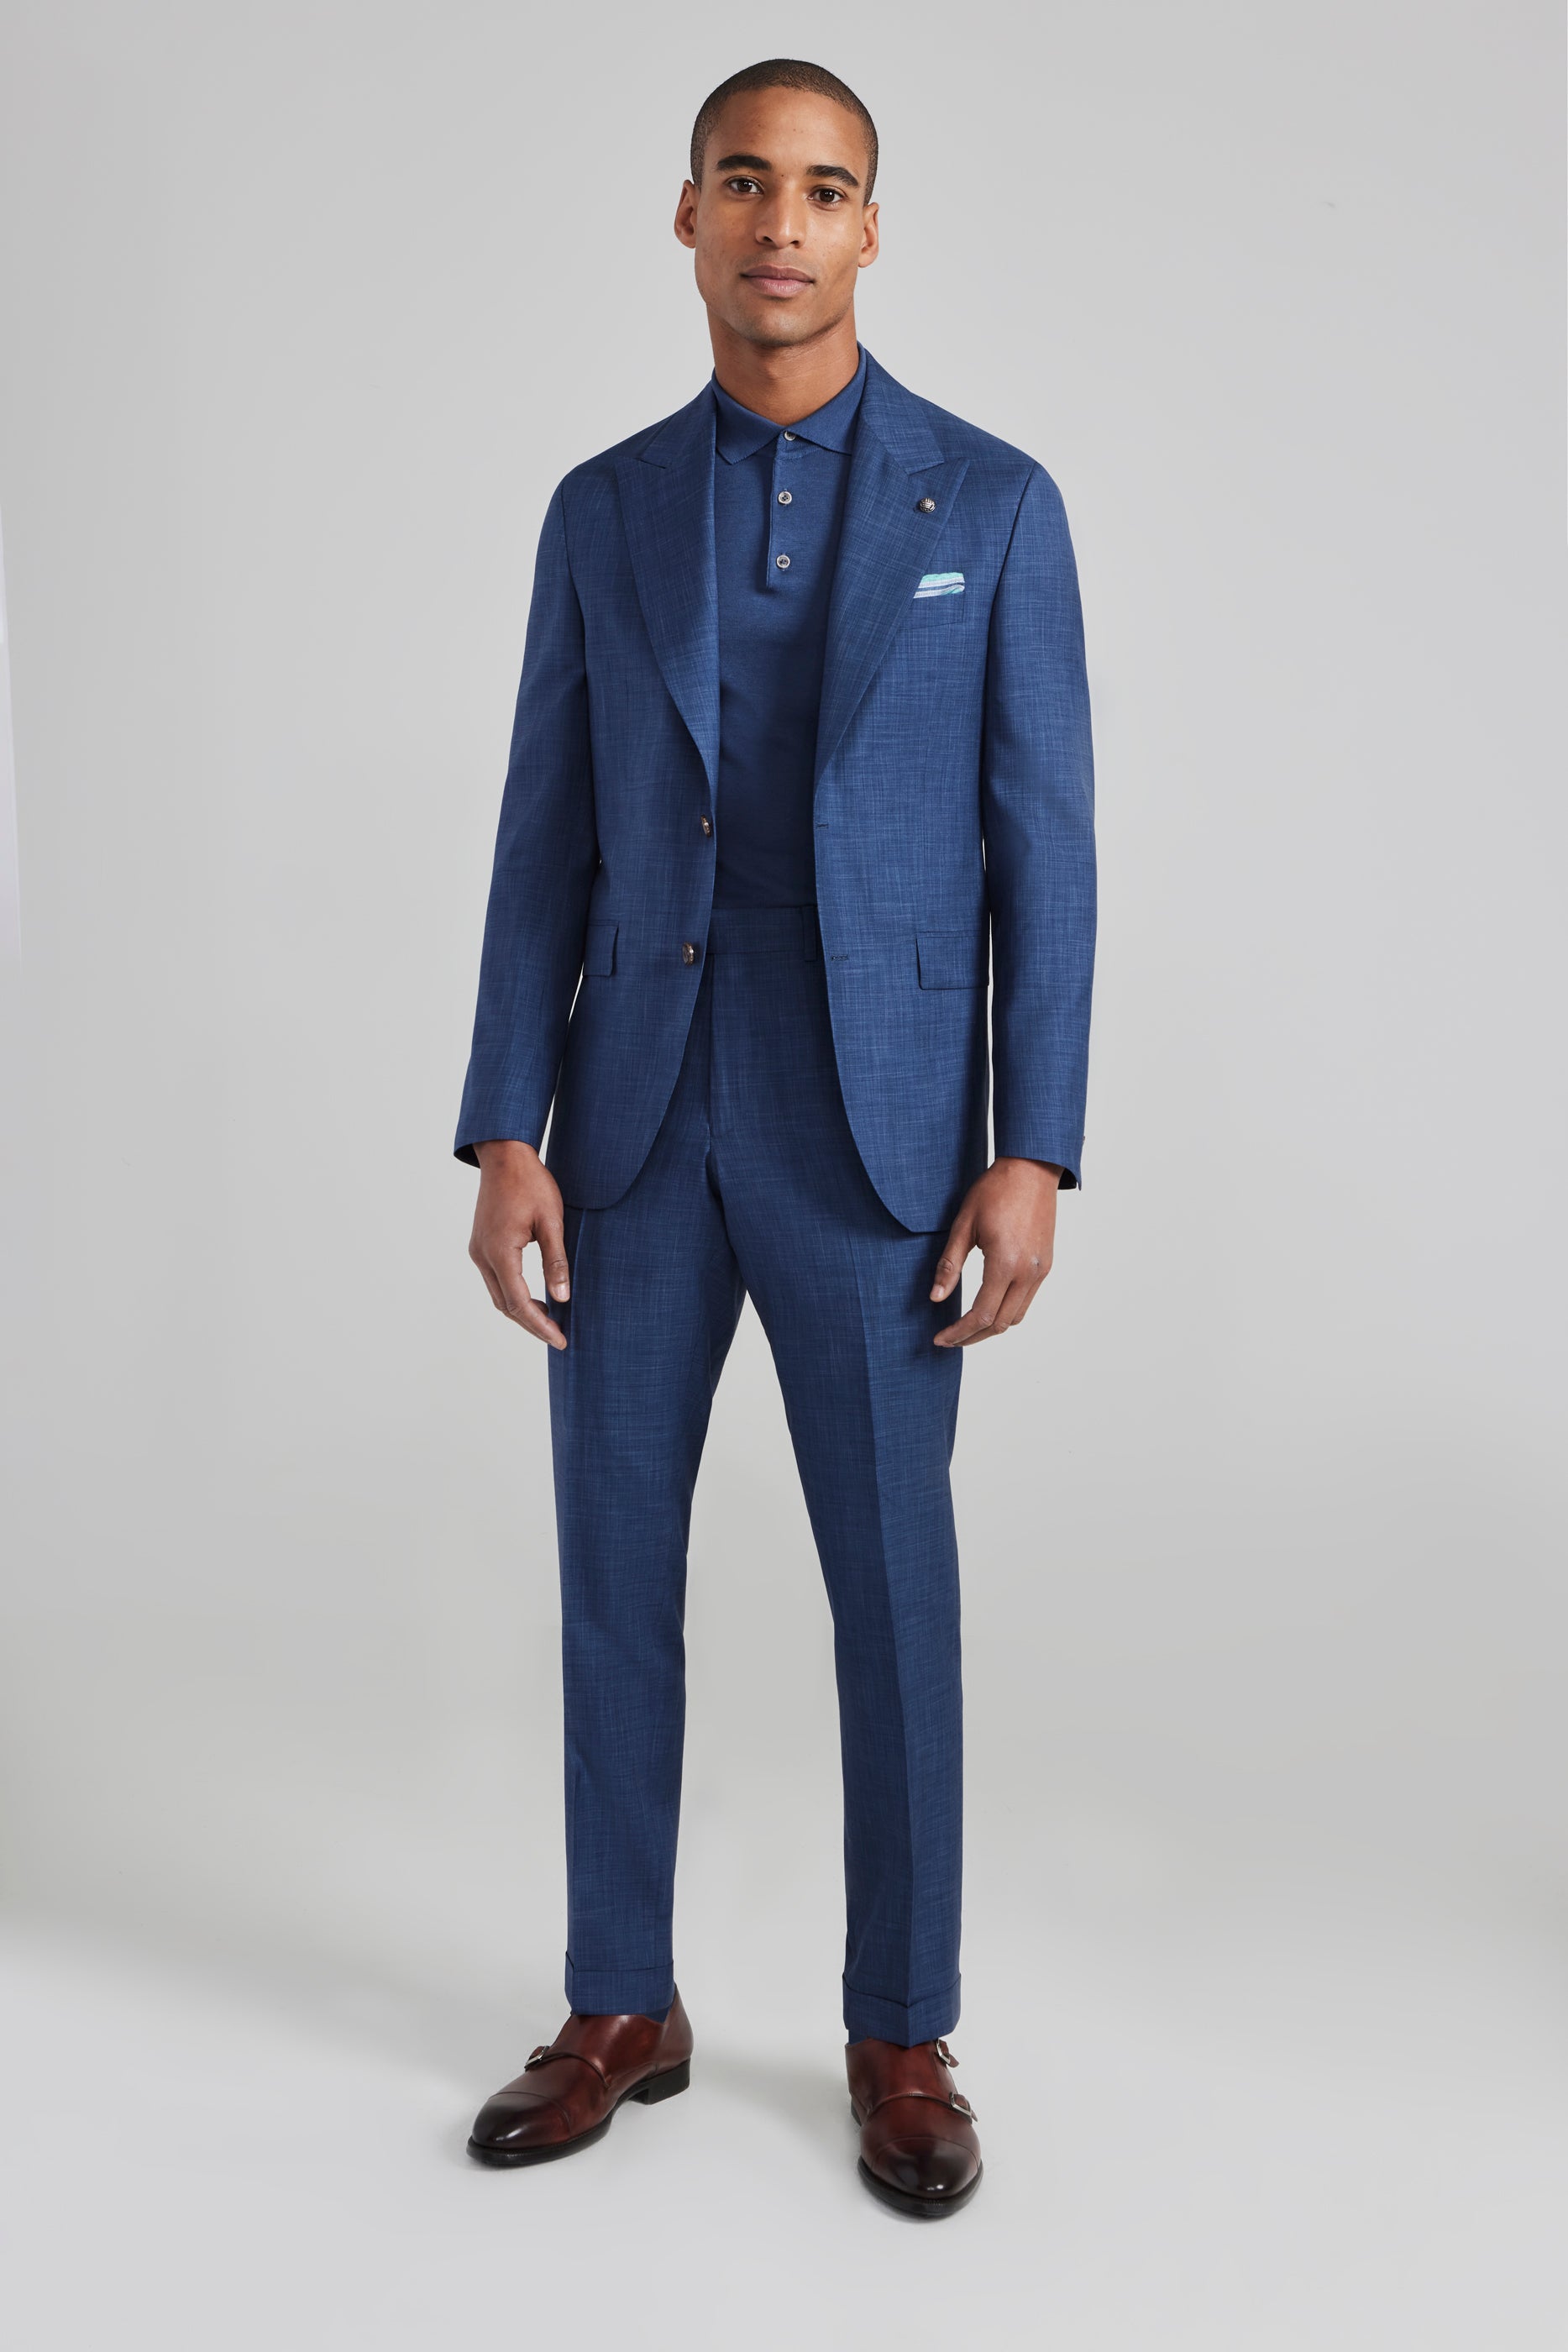 Alt view Morgan Solid Wool Super 150's Silk Suit in Medium Blue